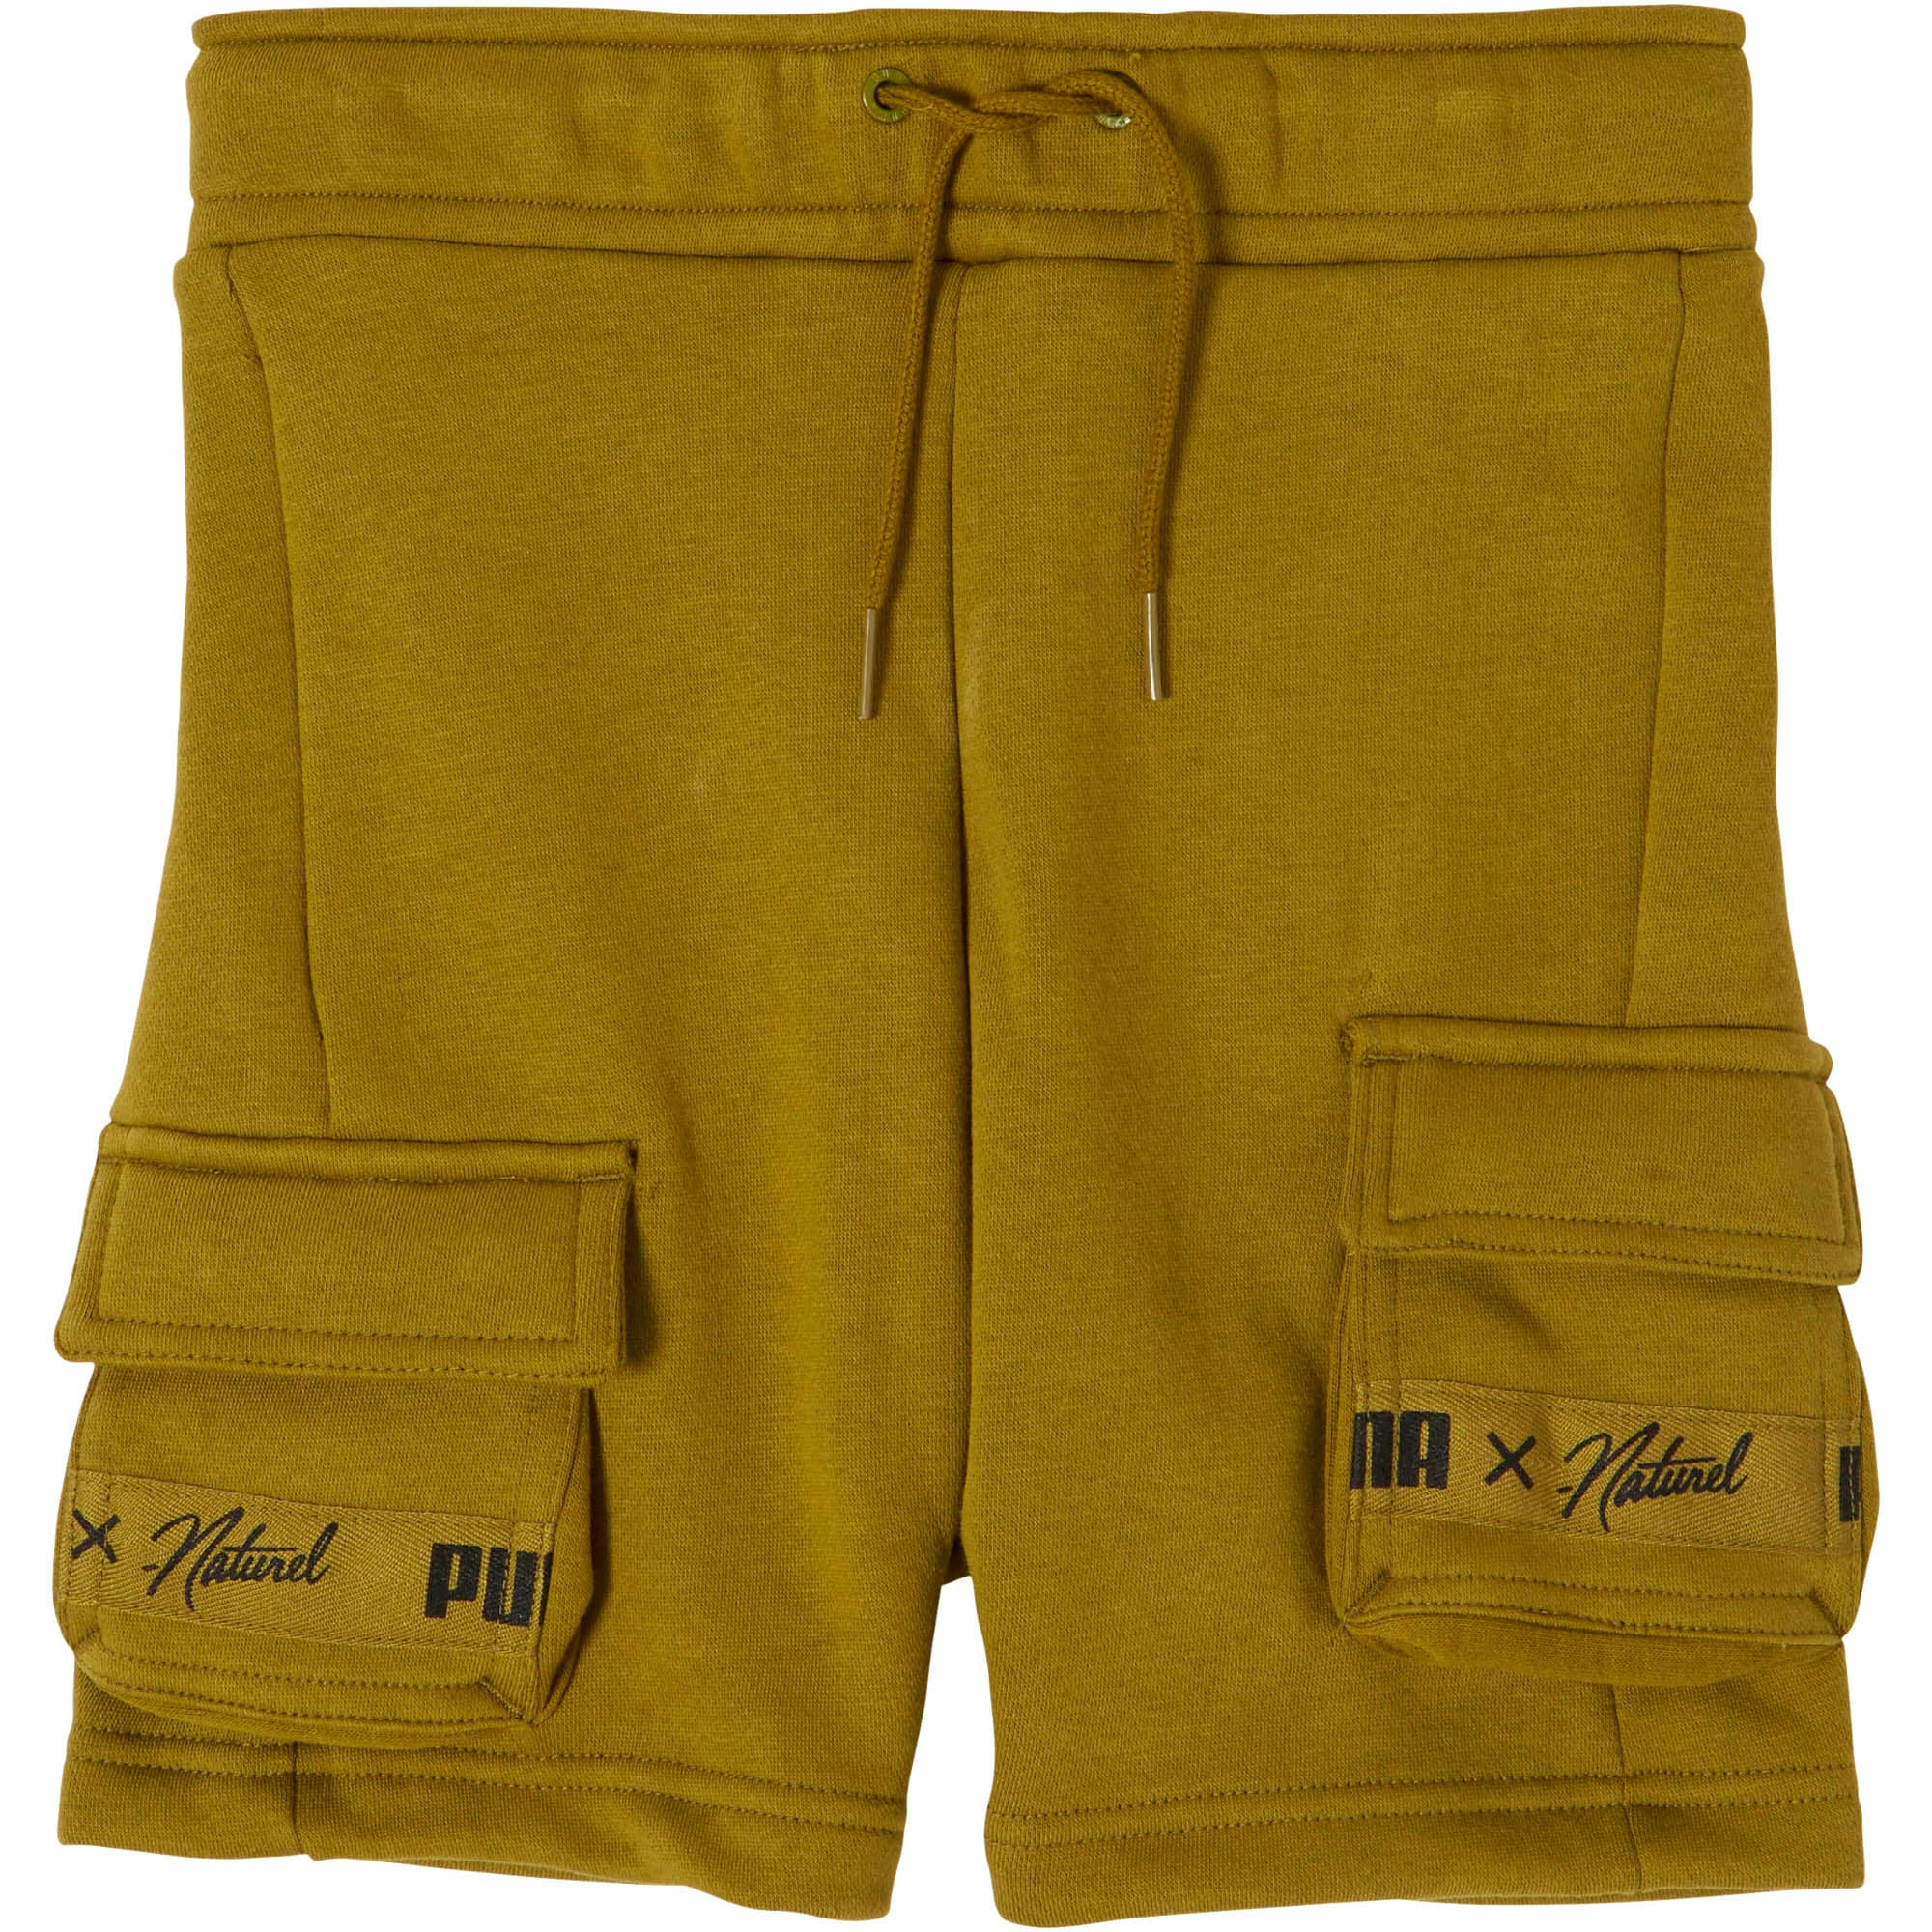 puma x naturel shorts